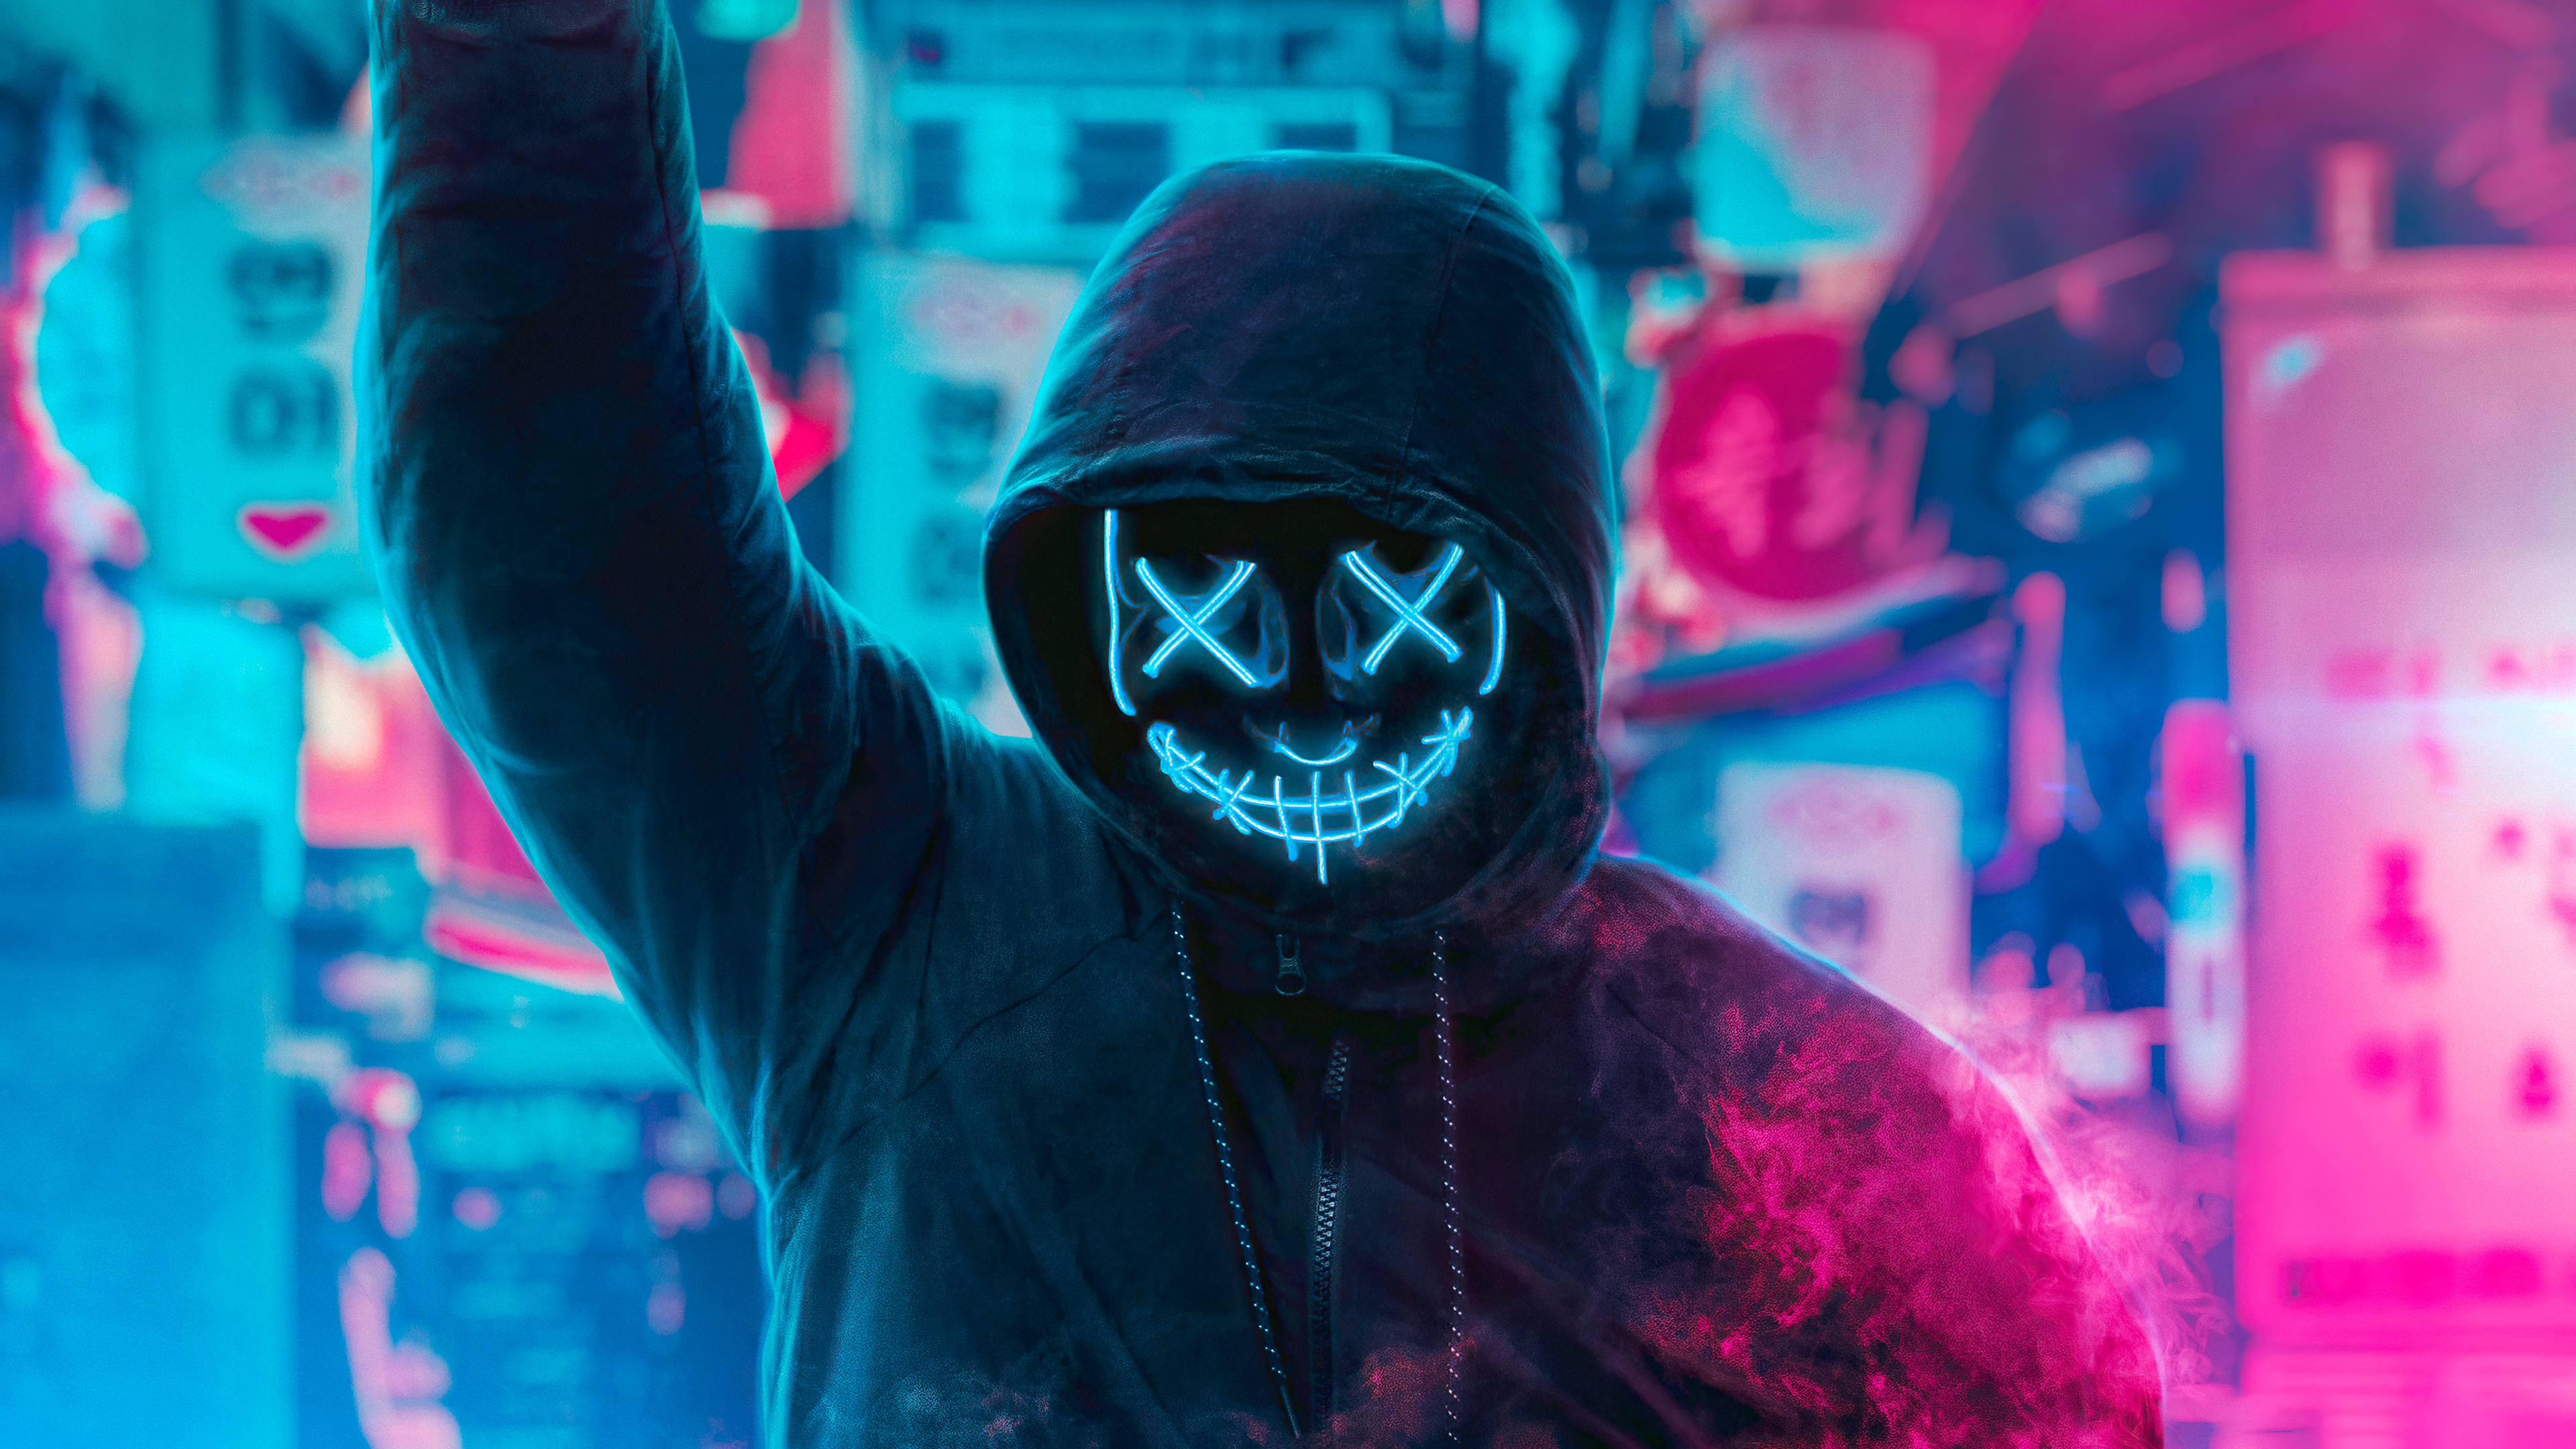 Wallpaper 4k Mask Guy Neon Man With Smoke Bomb